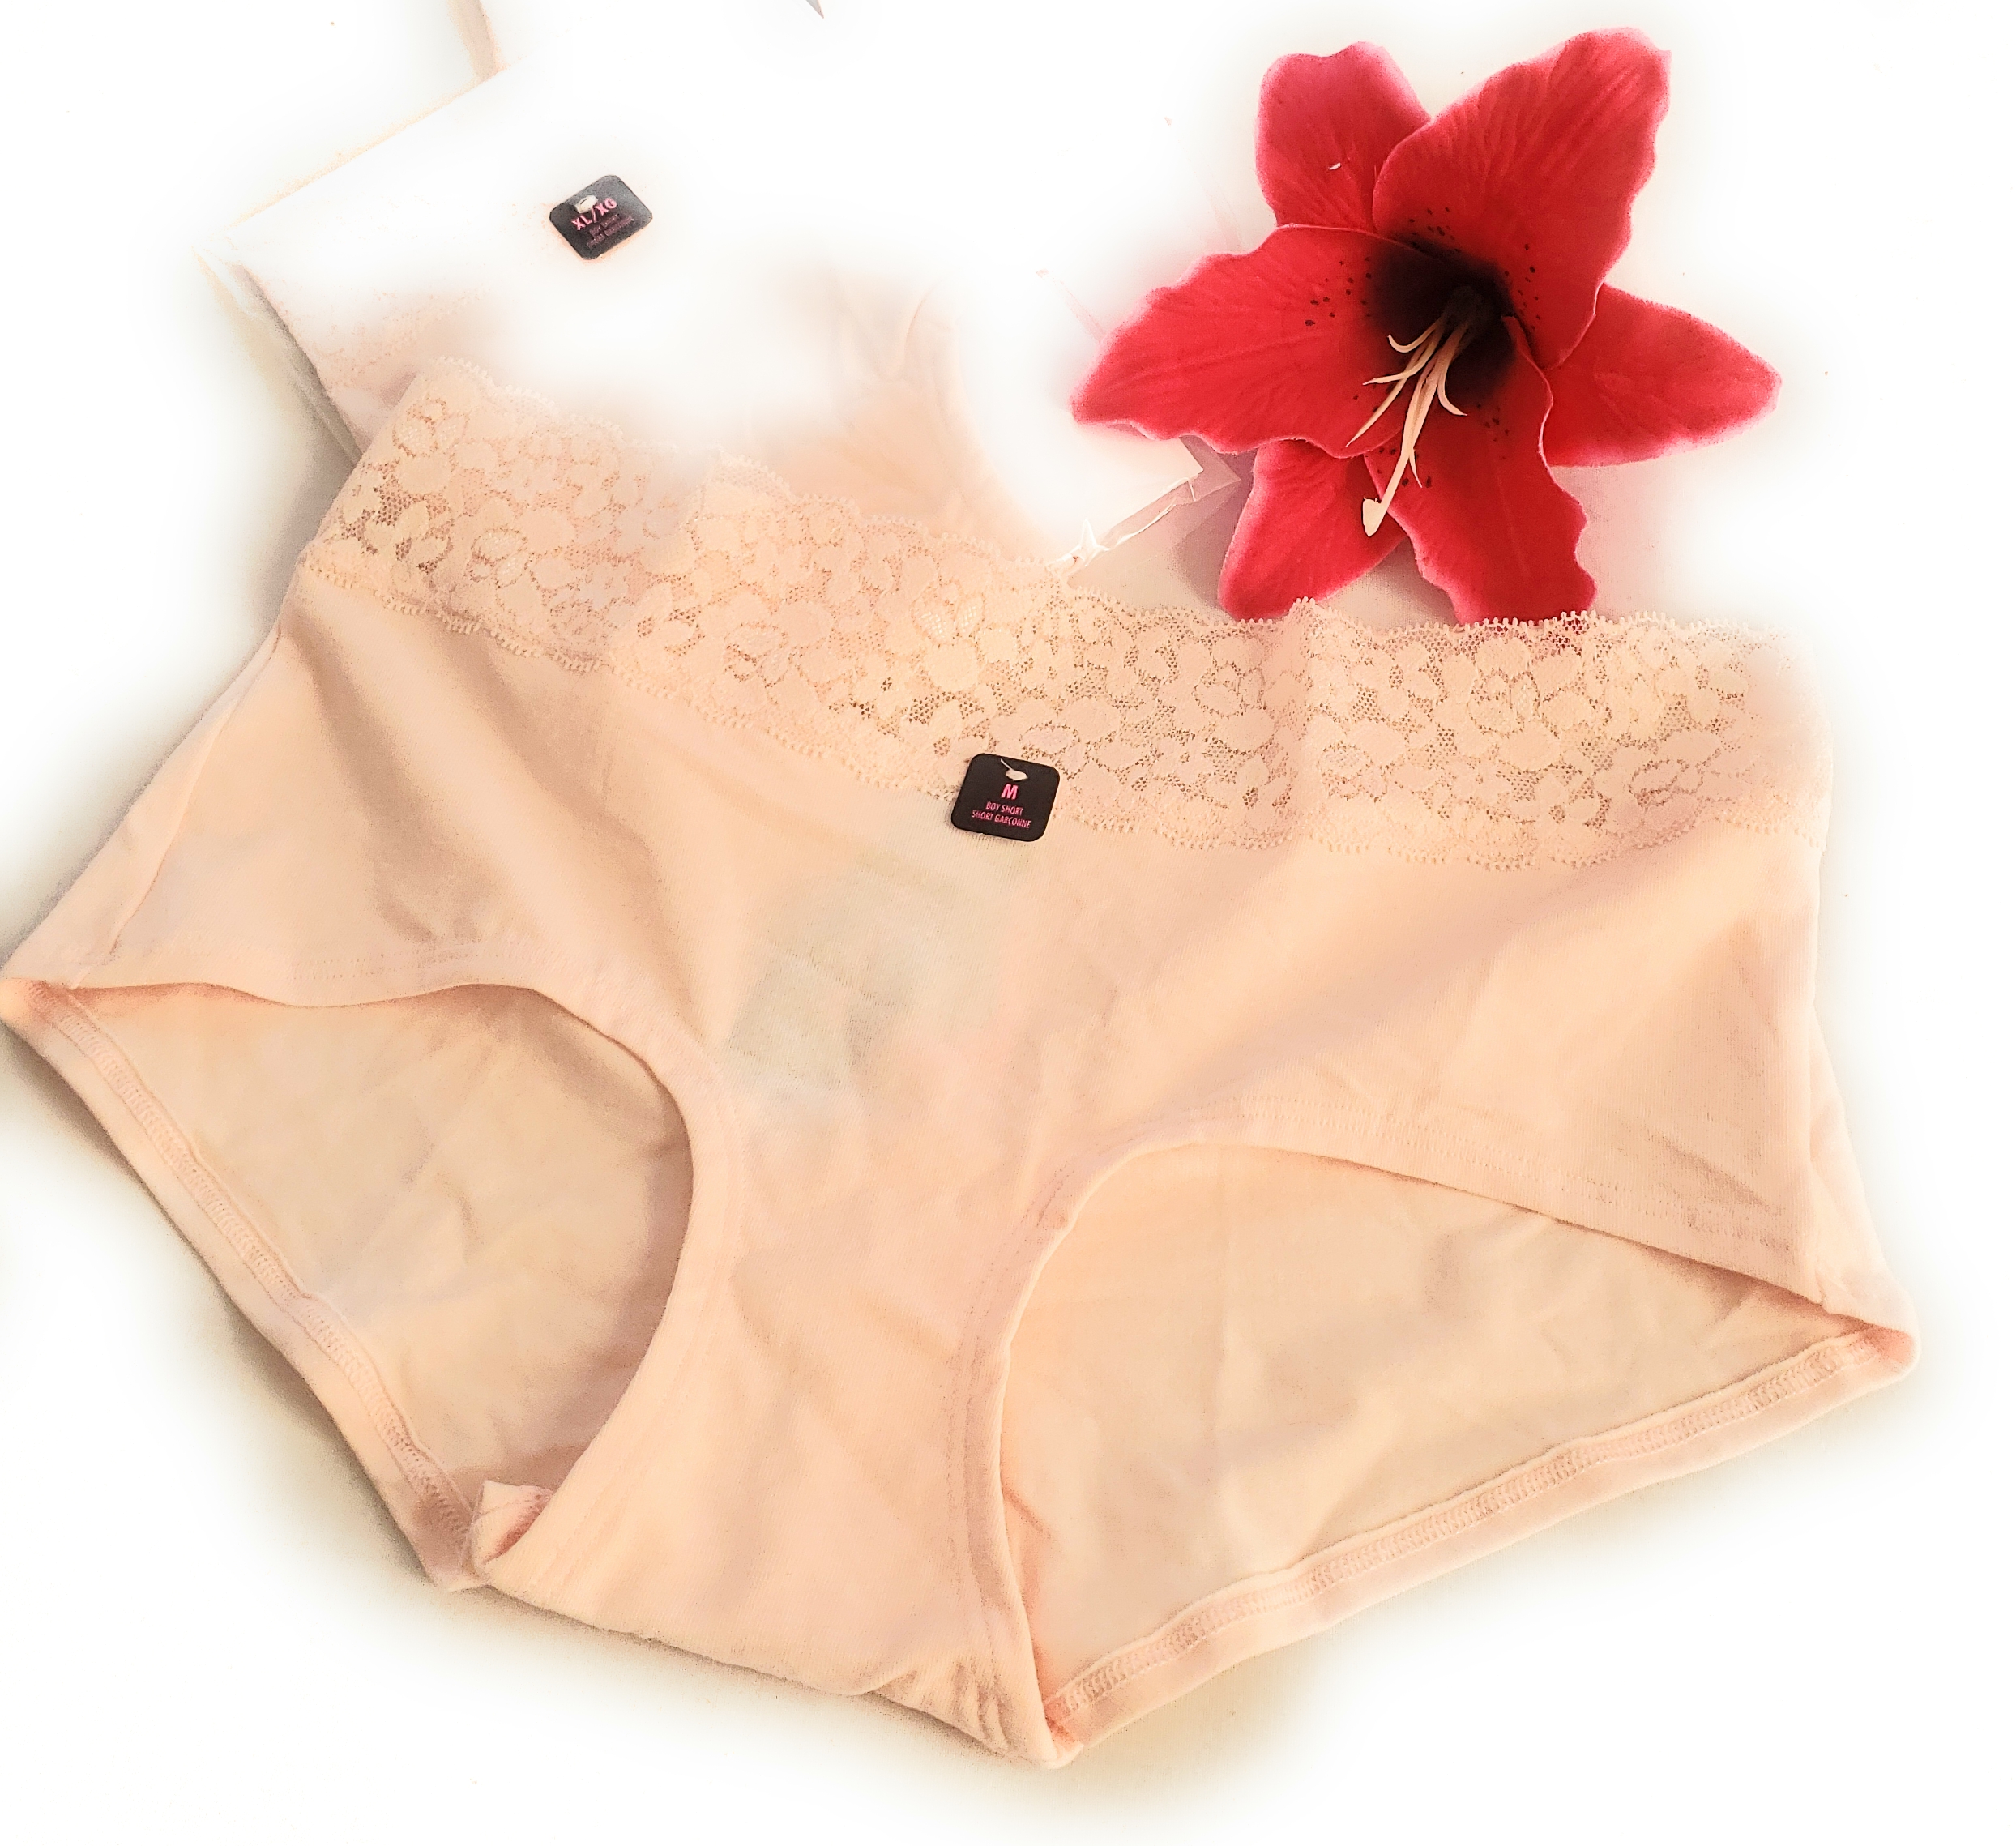 Panty by La Senza THONG/TANGA (1) Underwear women clothing sexyi